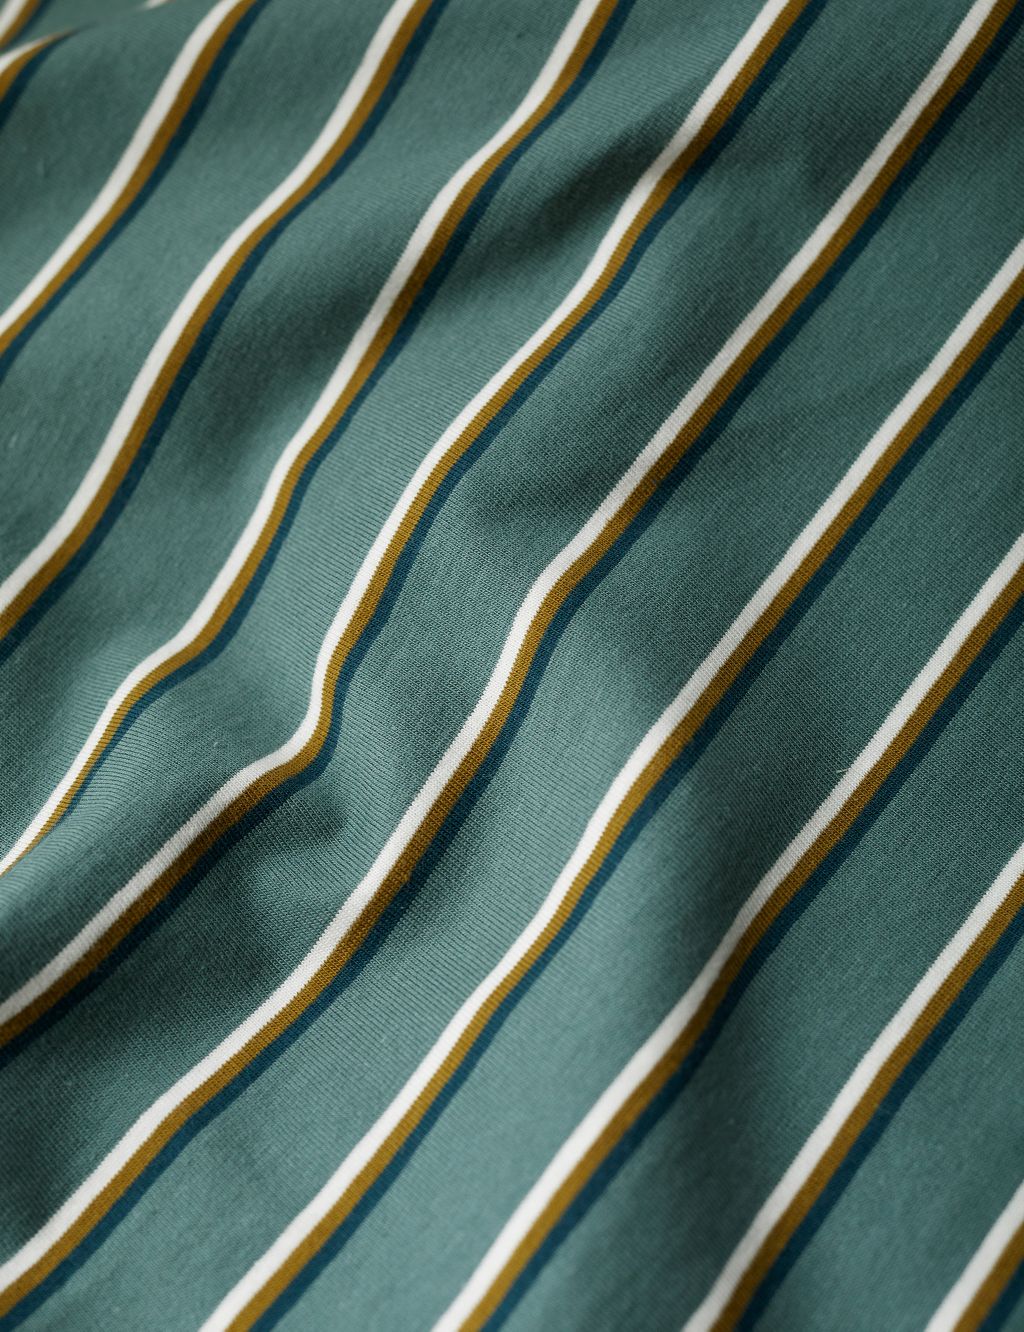 Organic Cotton Striped Long Sleeve T-Shirt image 4